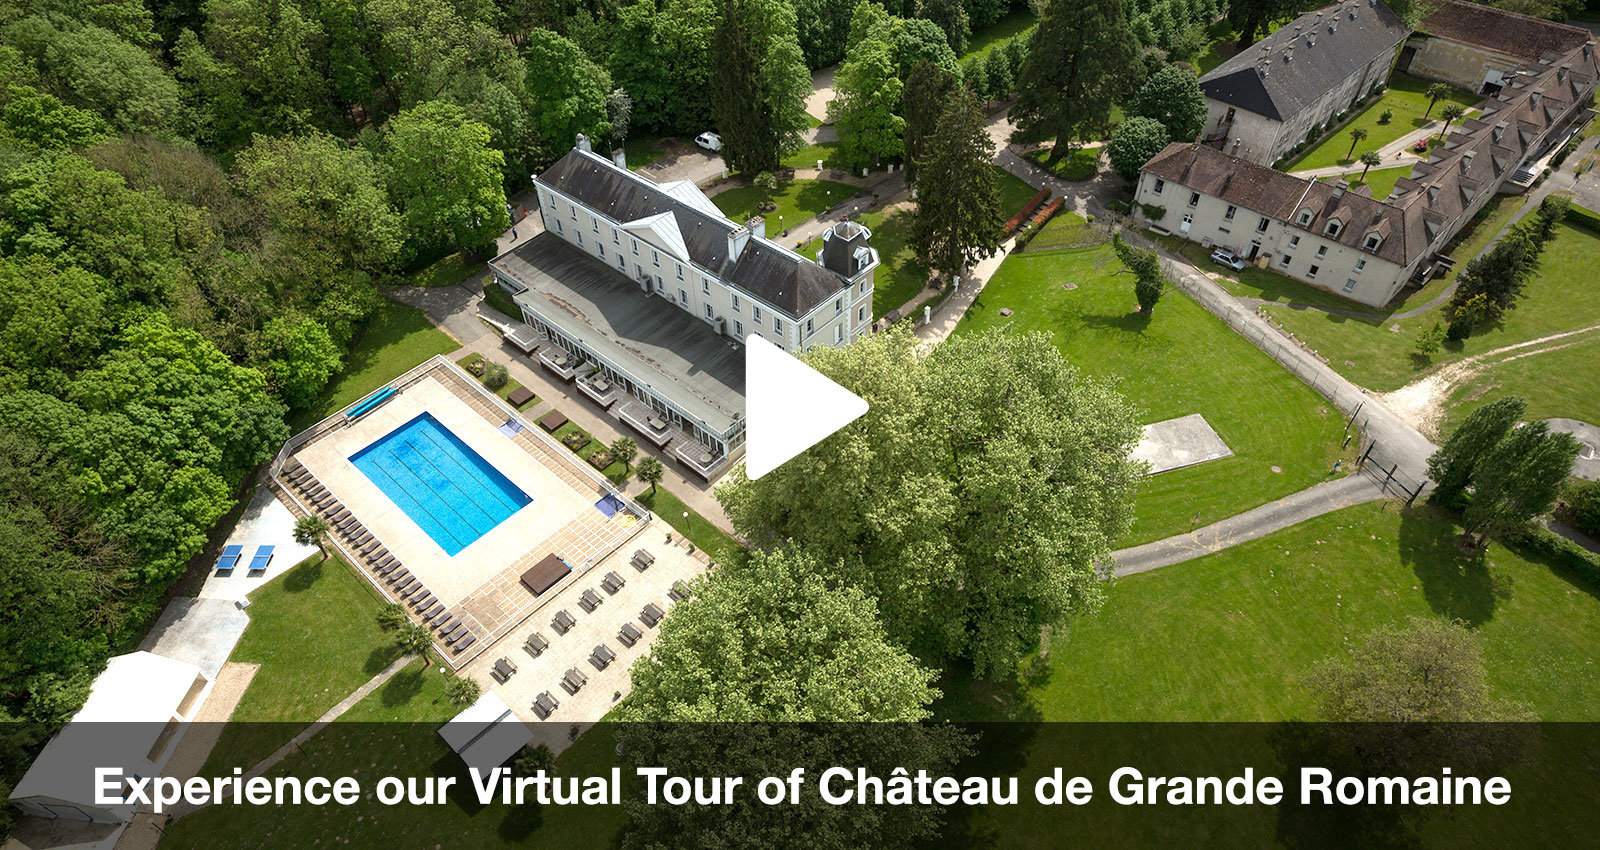 Chateau de Grande Romaine for International Students